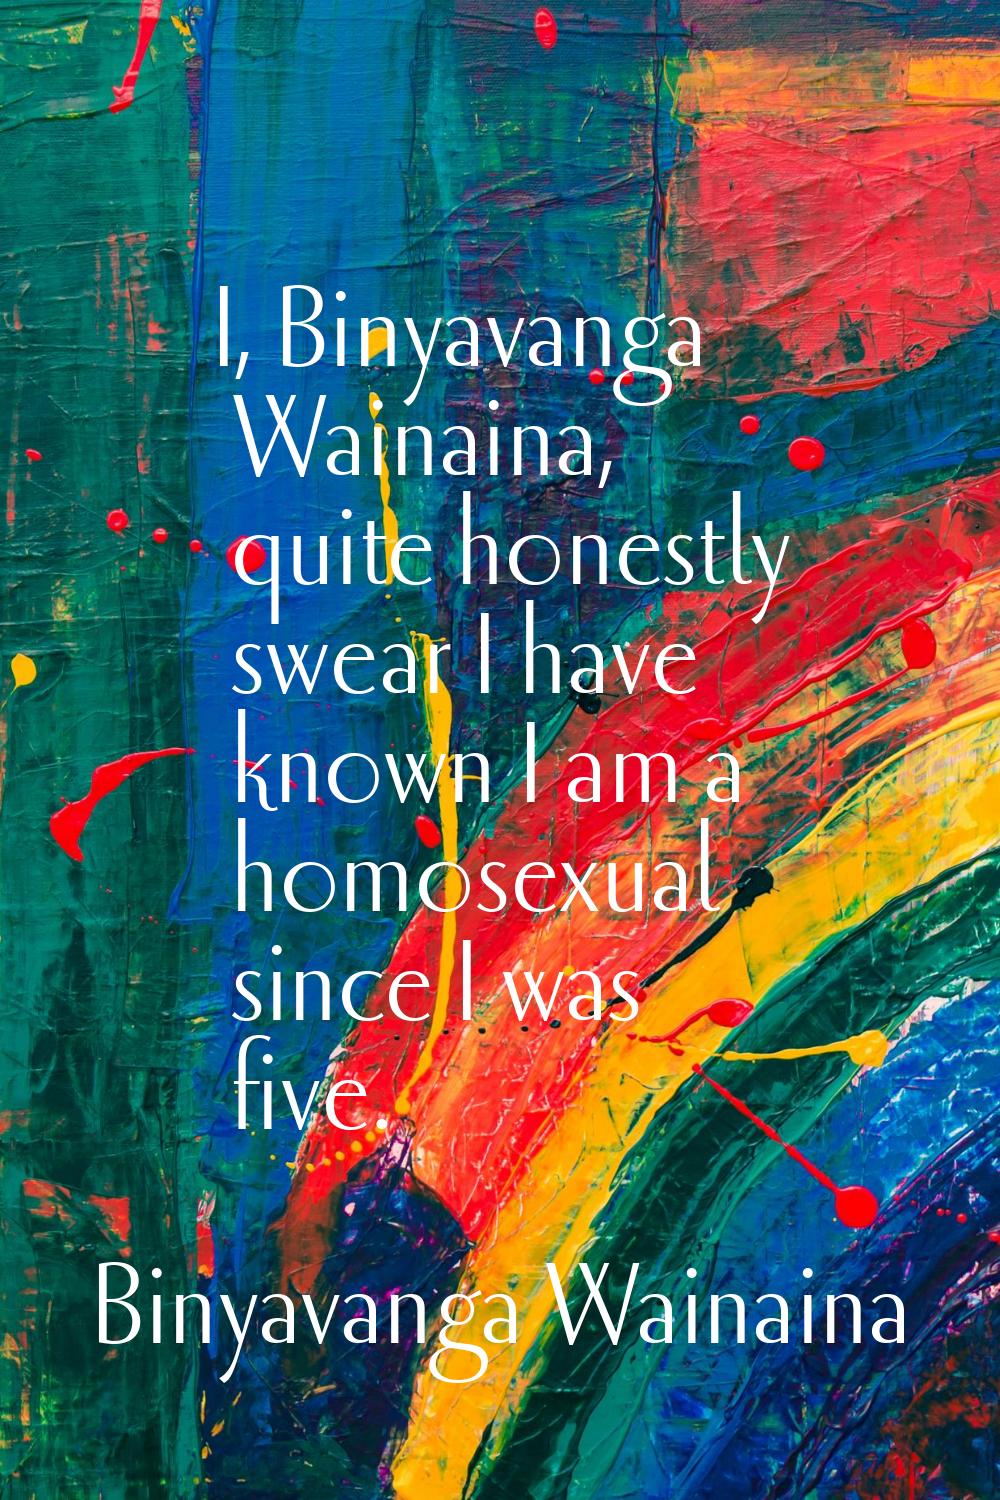 I, Binyavanga Wainaina, quite honestly swear I have known I am a homosexual since I was five.